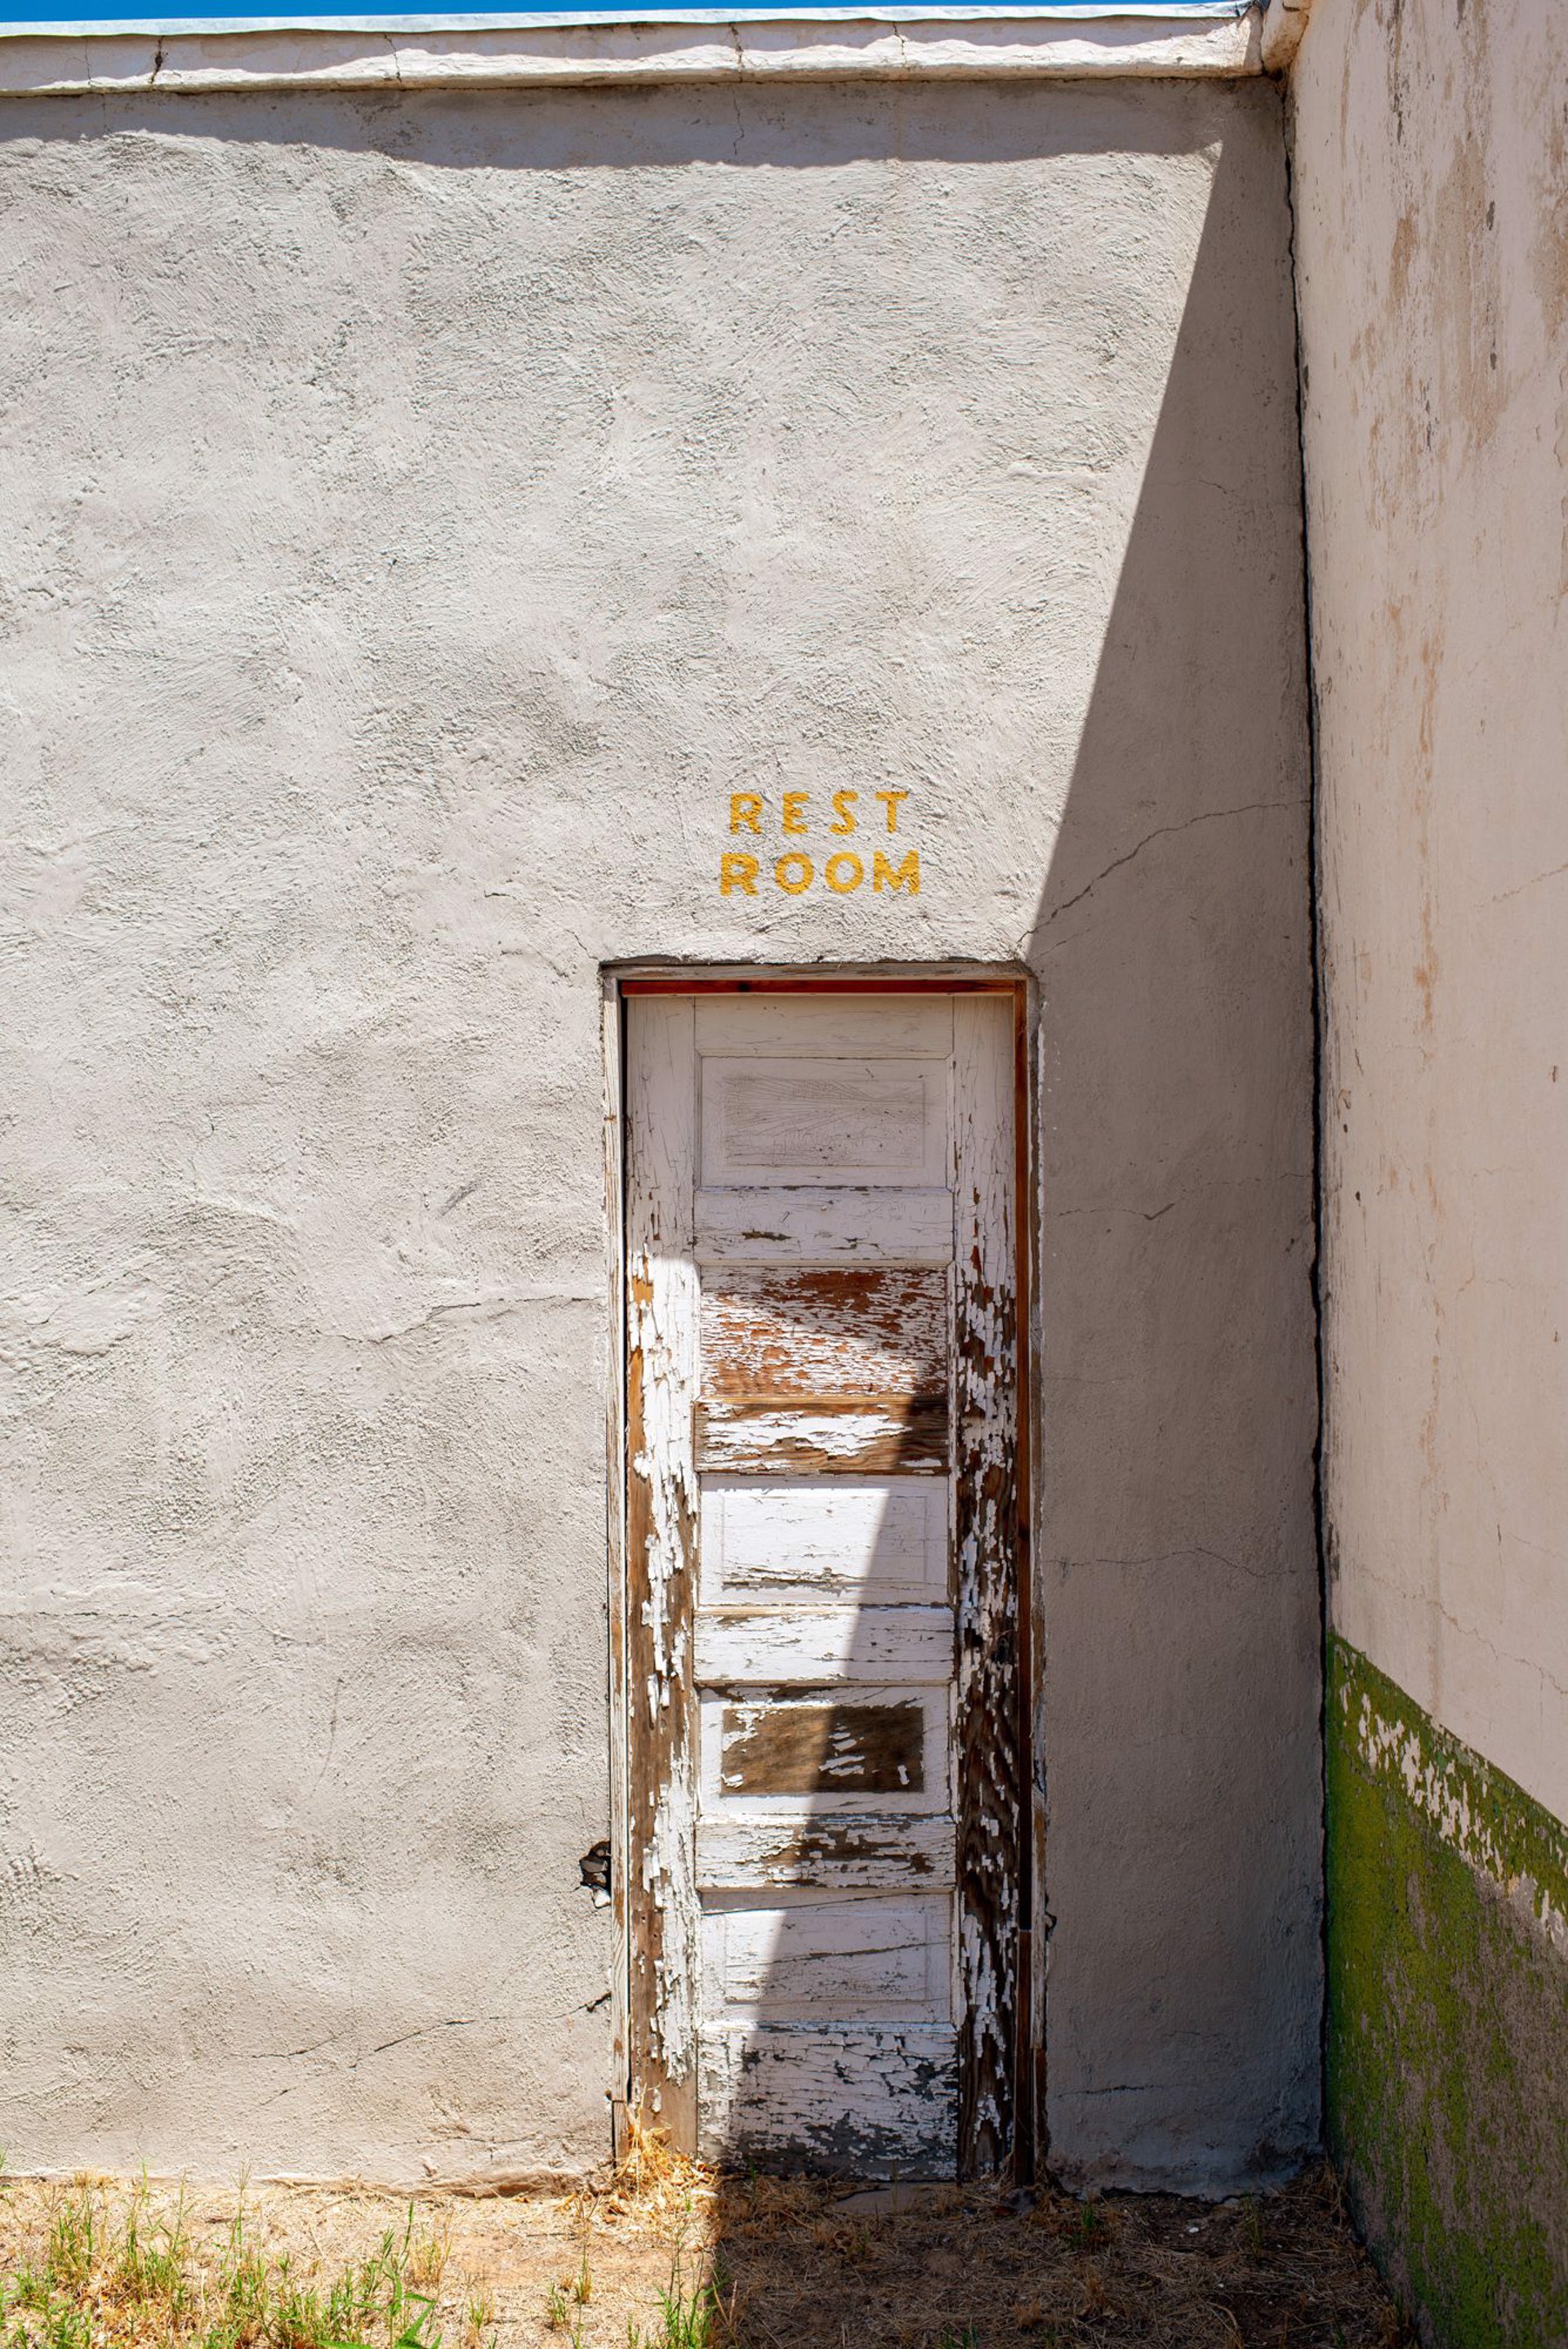 Portfolio UF: Marfa Rest Room by Thom Jackson